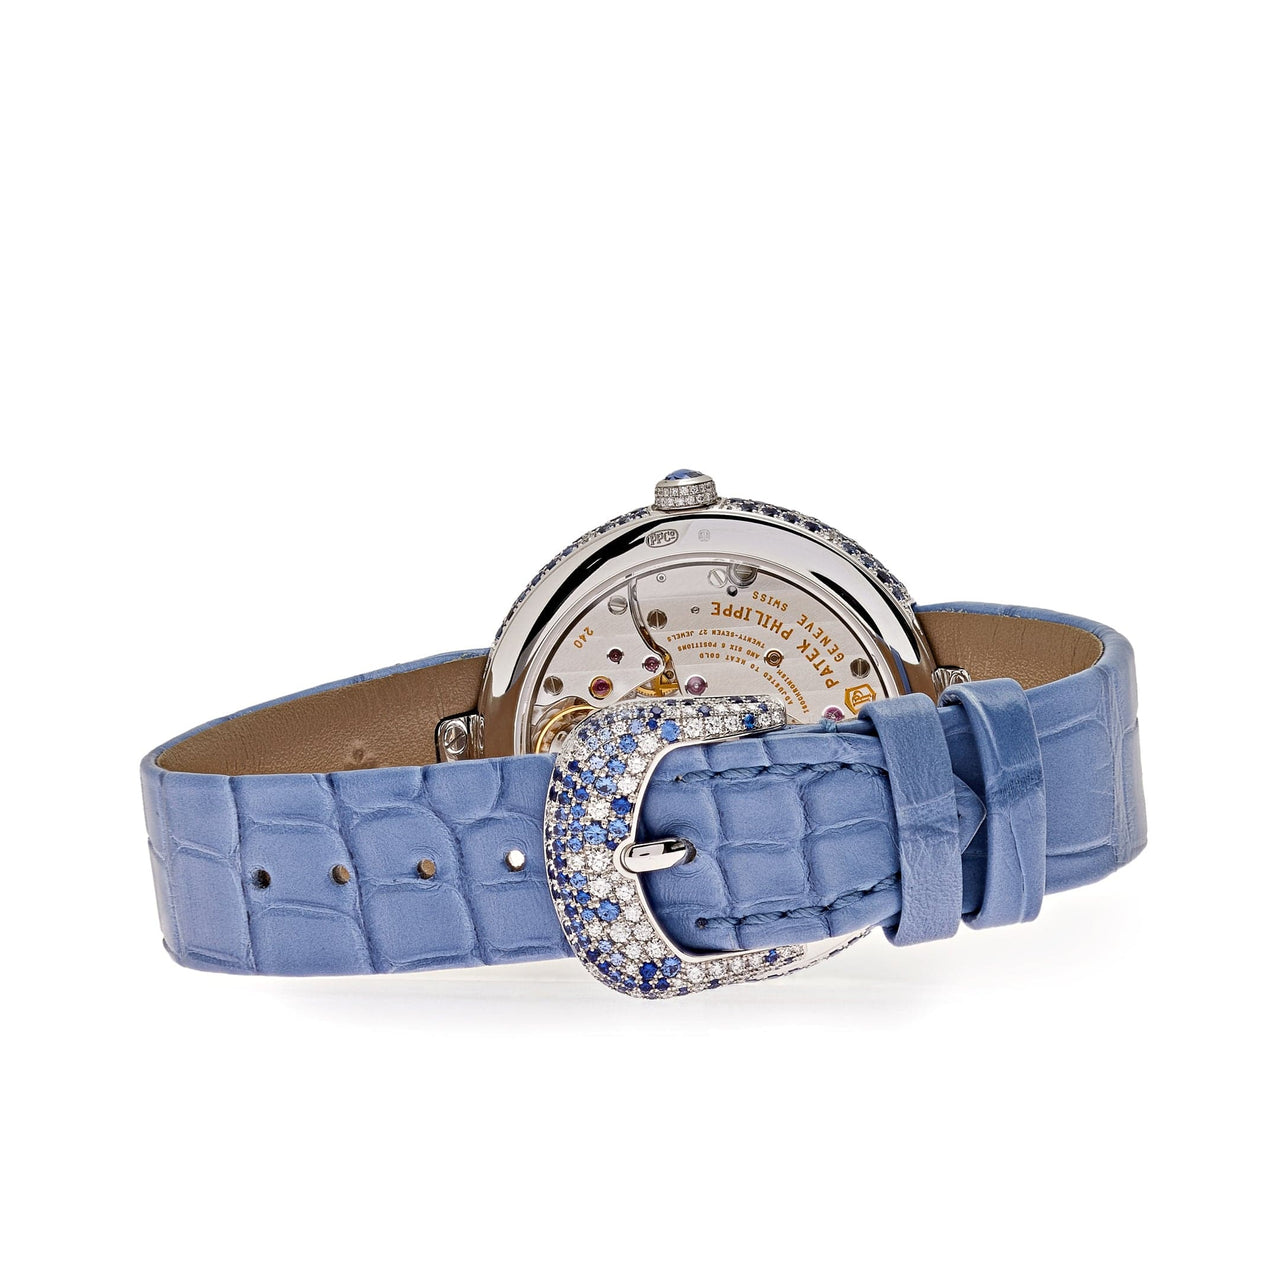 Luxury Watch Patek Philippe Calatrava White Gold Mother of Pearl Diamonds and Blue Sapphires 4899/901G-001 Wrist Aficionado